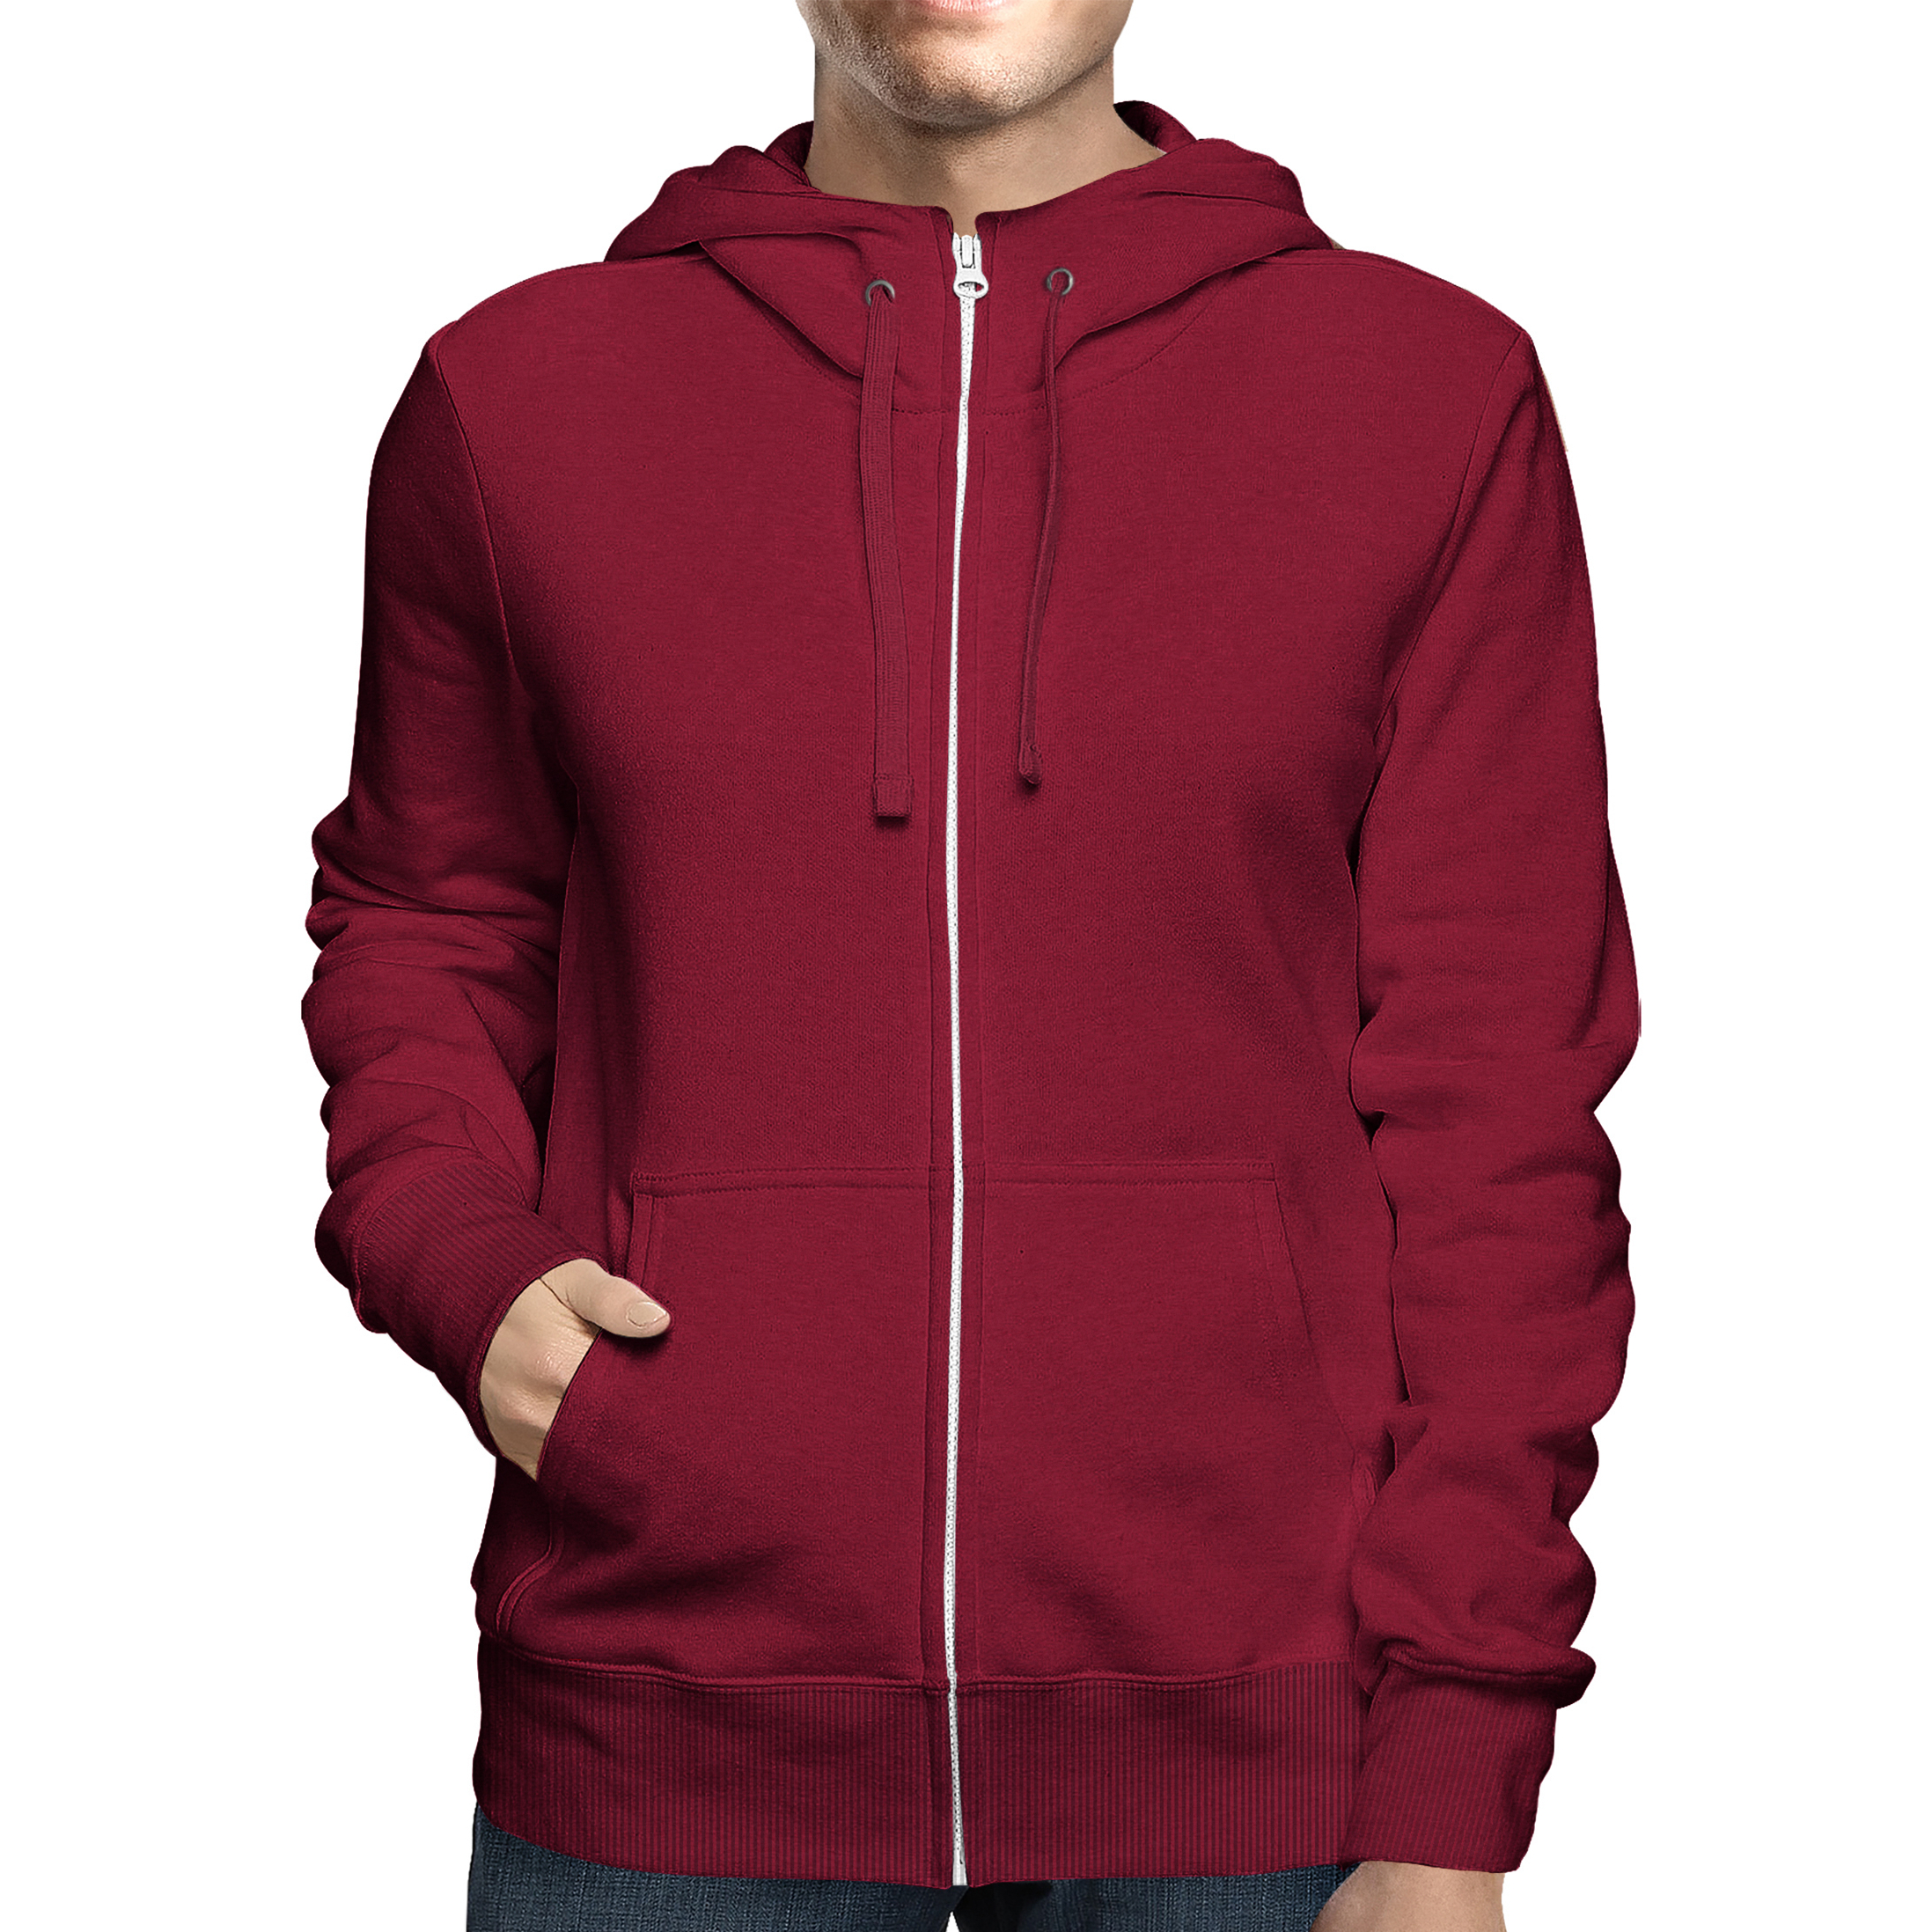 2-Pack: Men's Full Zip Up Fleece-Lined Hoodie Sweatshirt (Big & Tall Size Available) - Burgundy, Medium